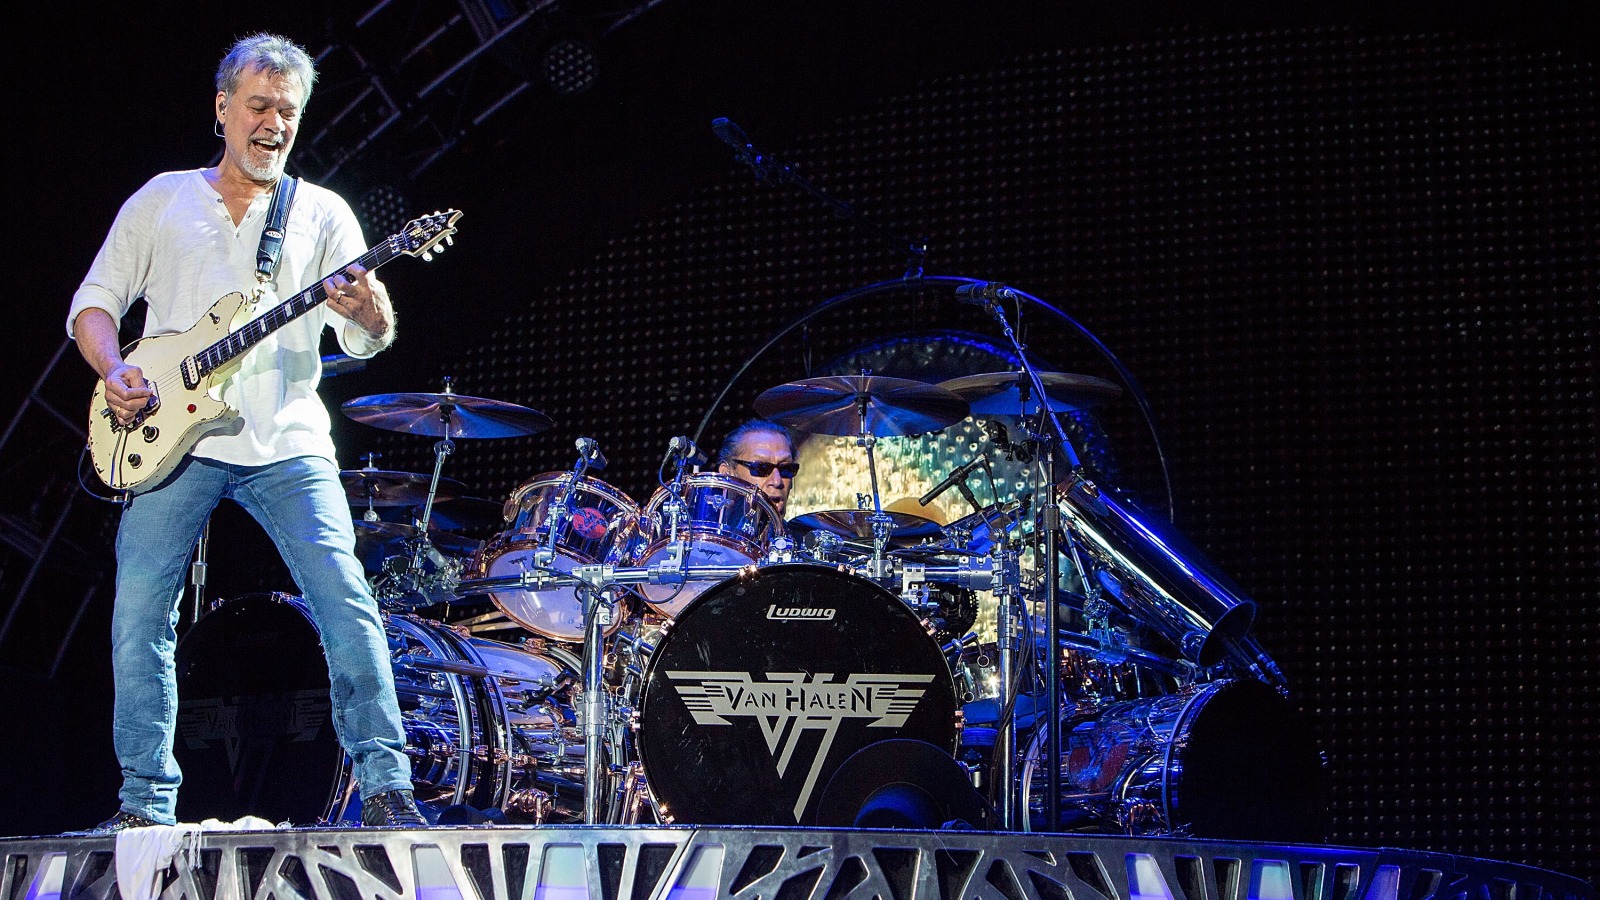 Details About Eddie Van Halen's Last Performance